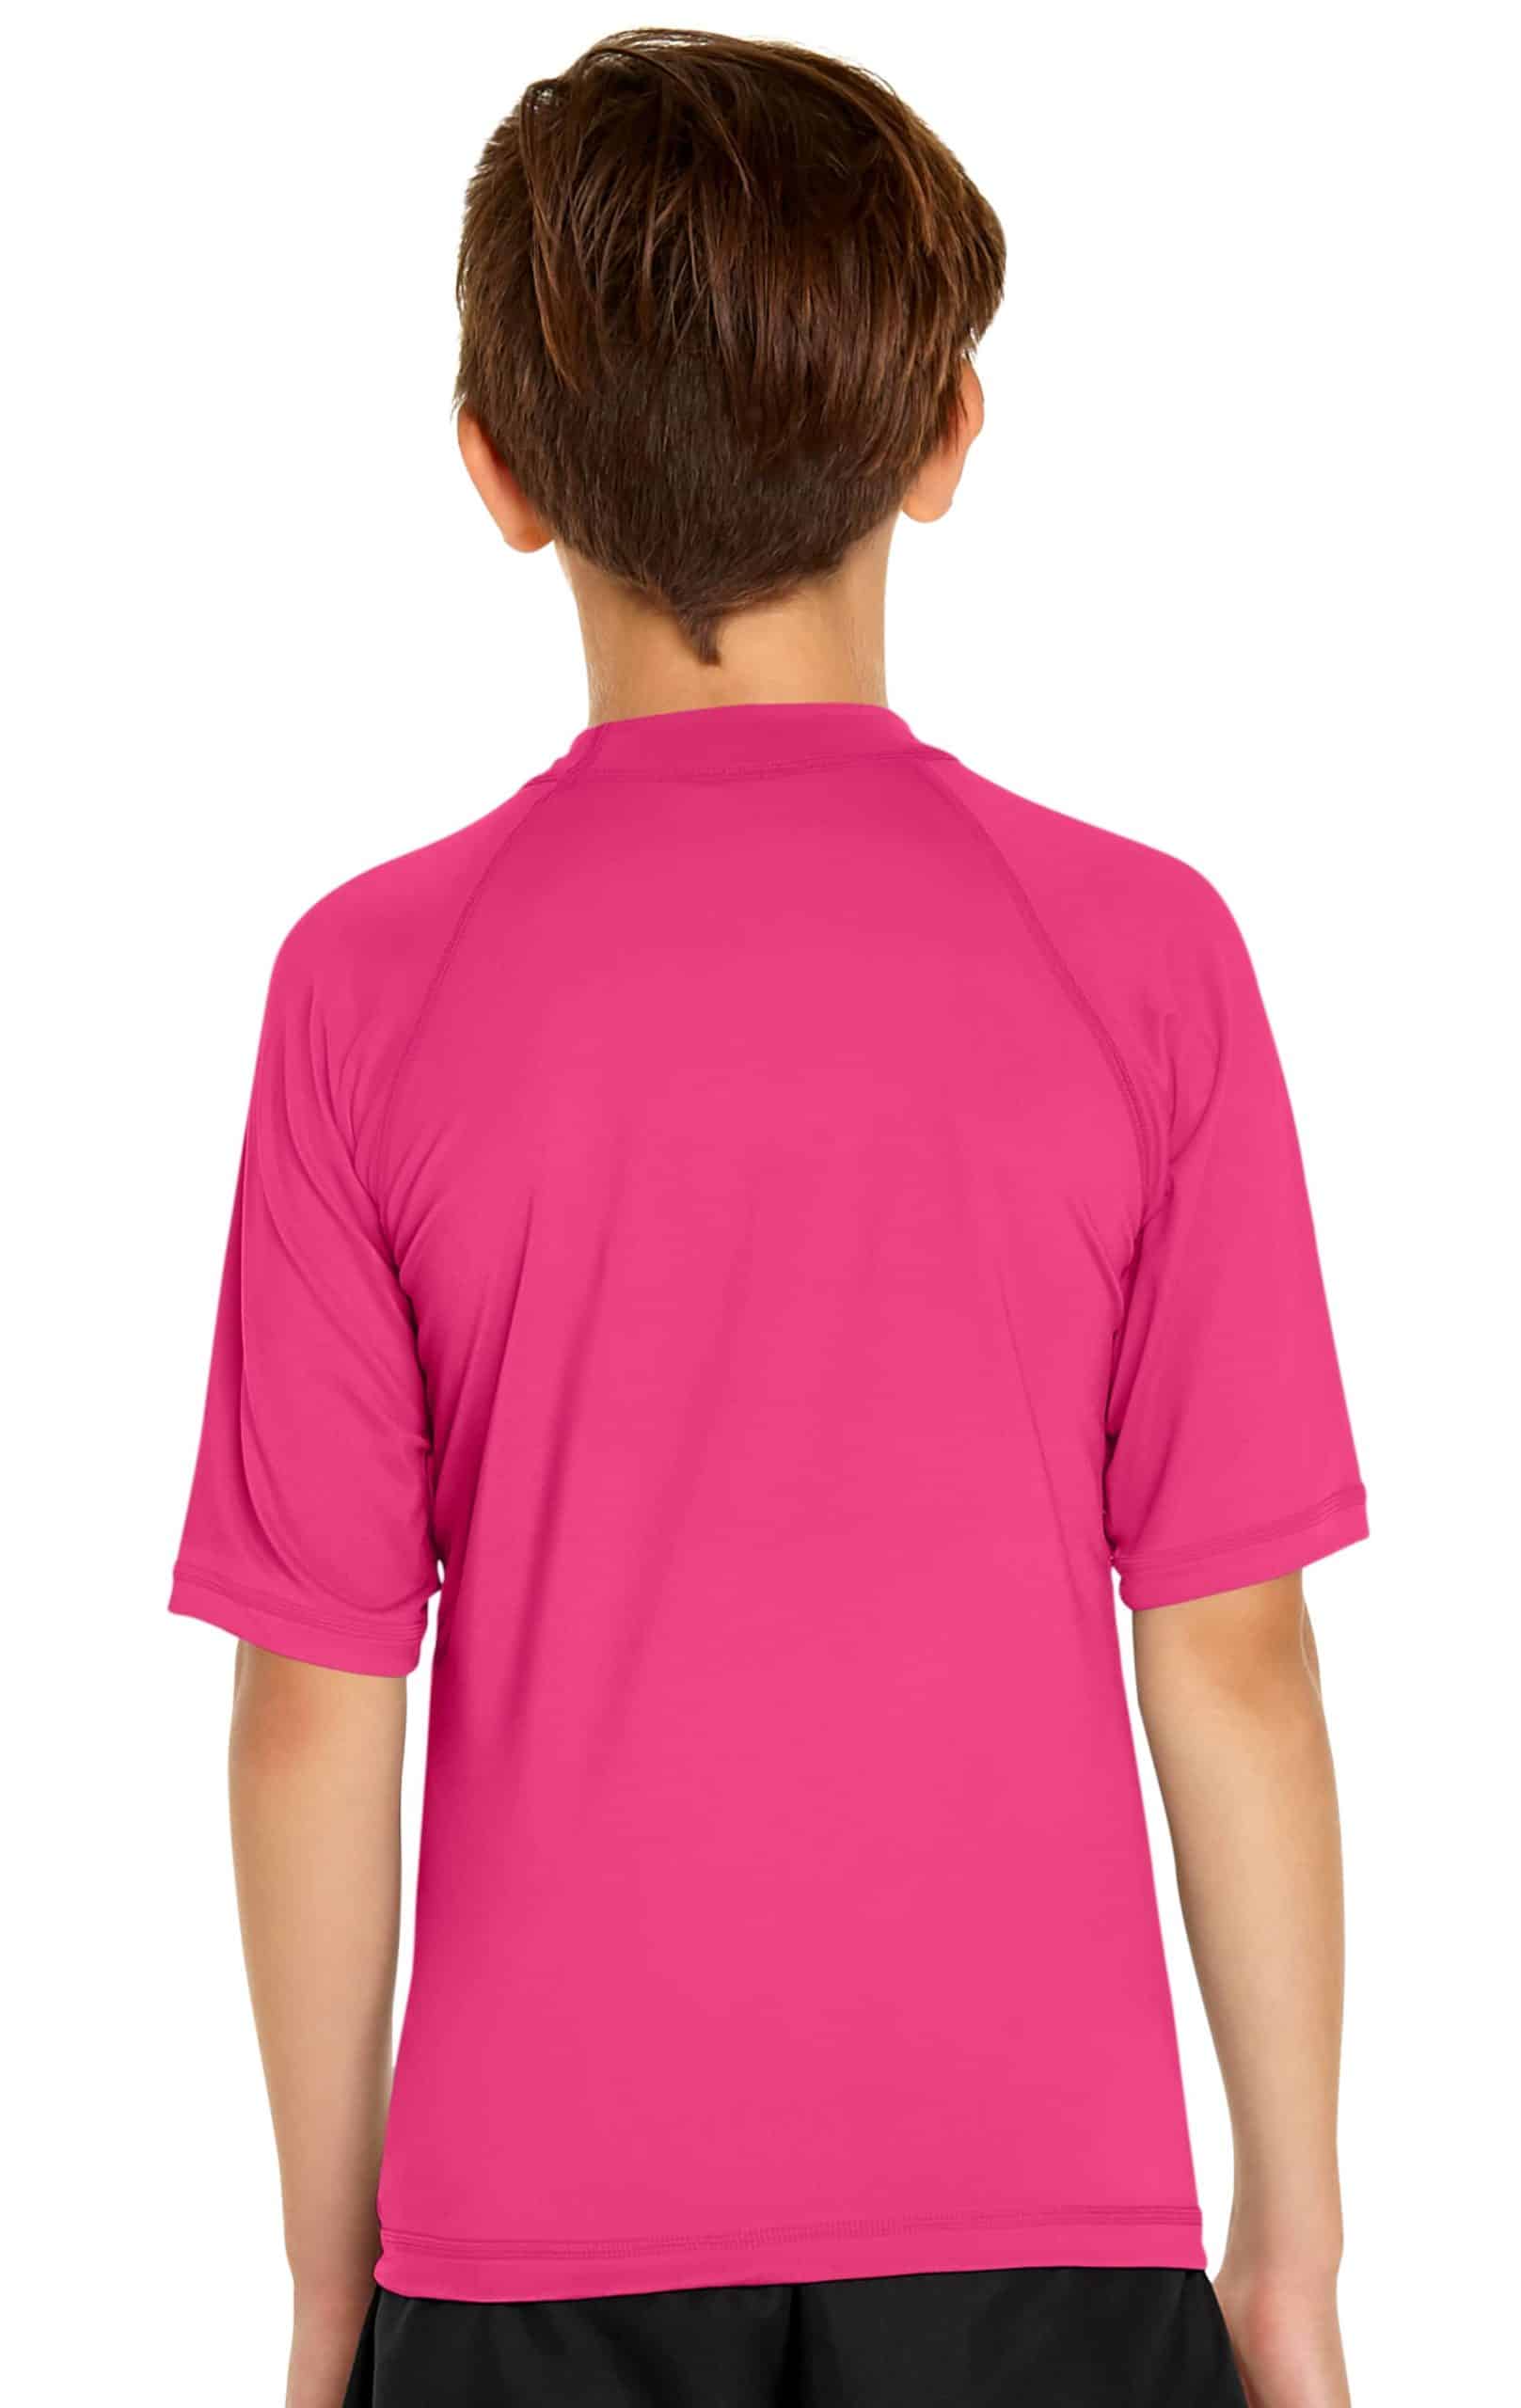 Girl's Short Sleeve Rash Guard - Pink - Wet Effect, Inc.